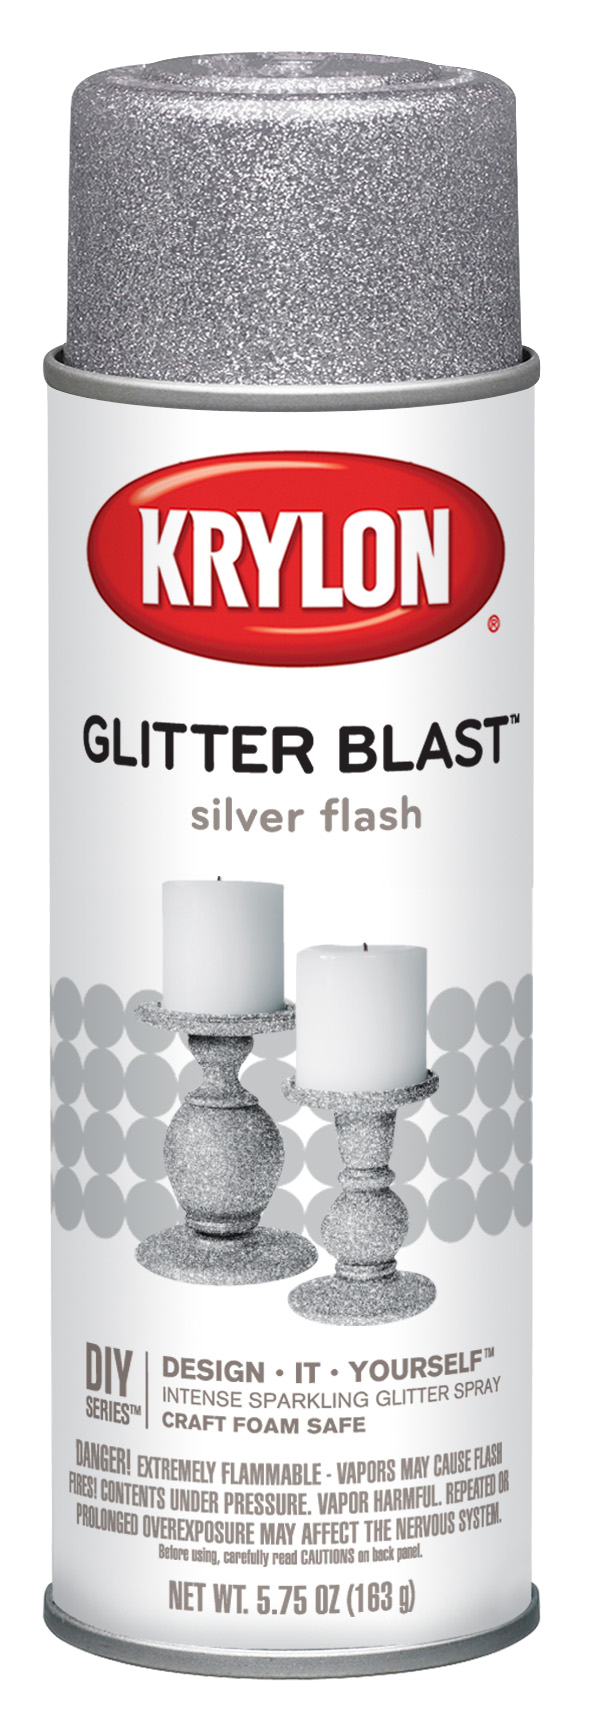 Krylon Glitter Blast Spray Paint, Silver Flash, 5.75 oz. - image 2 of 4